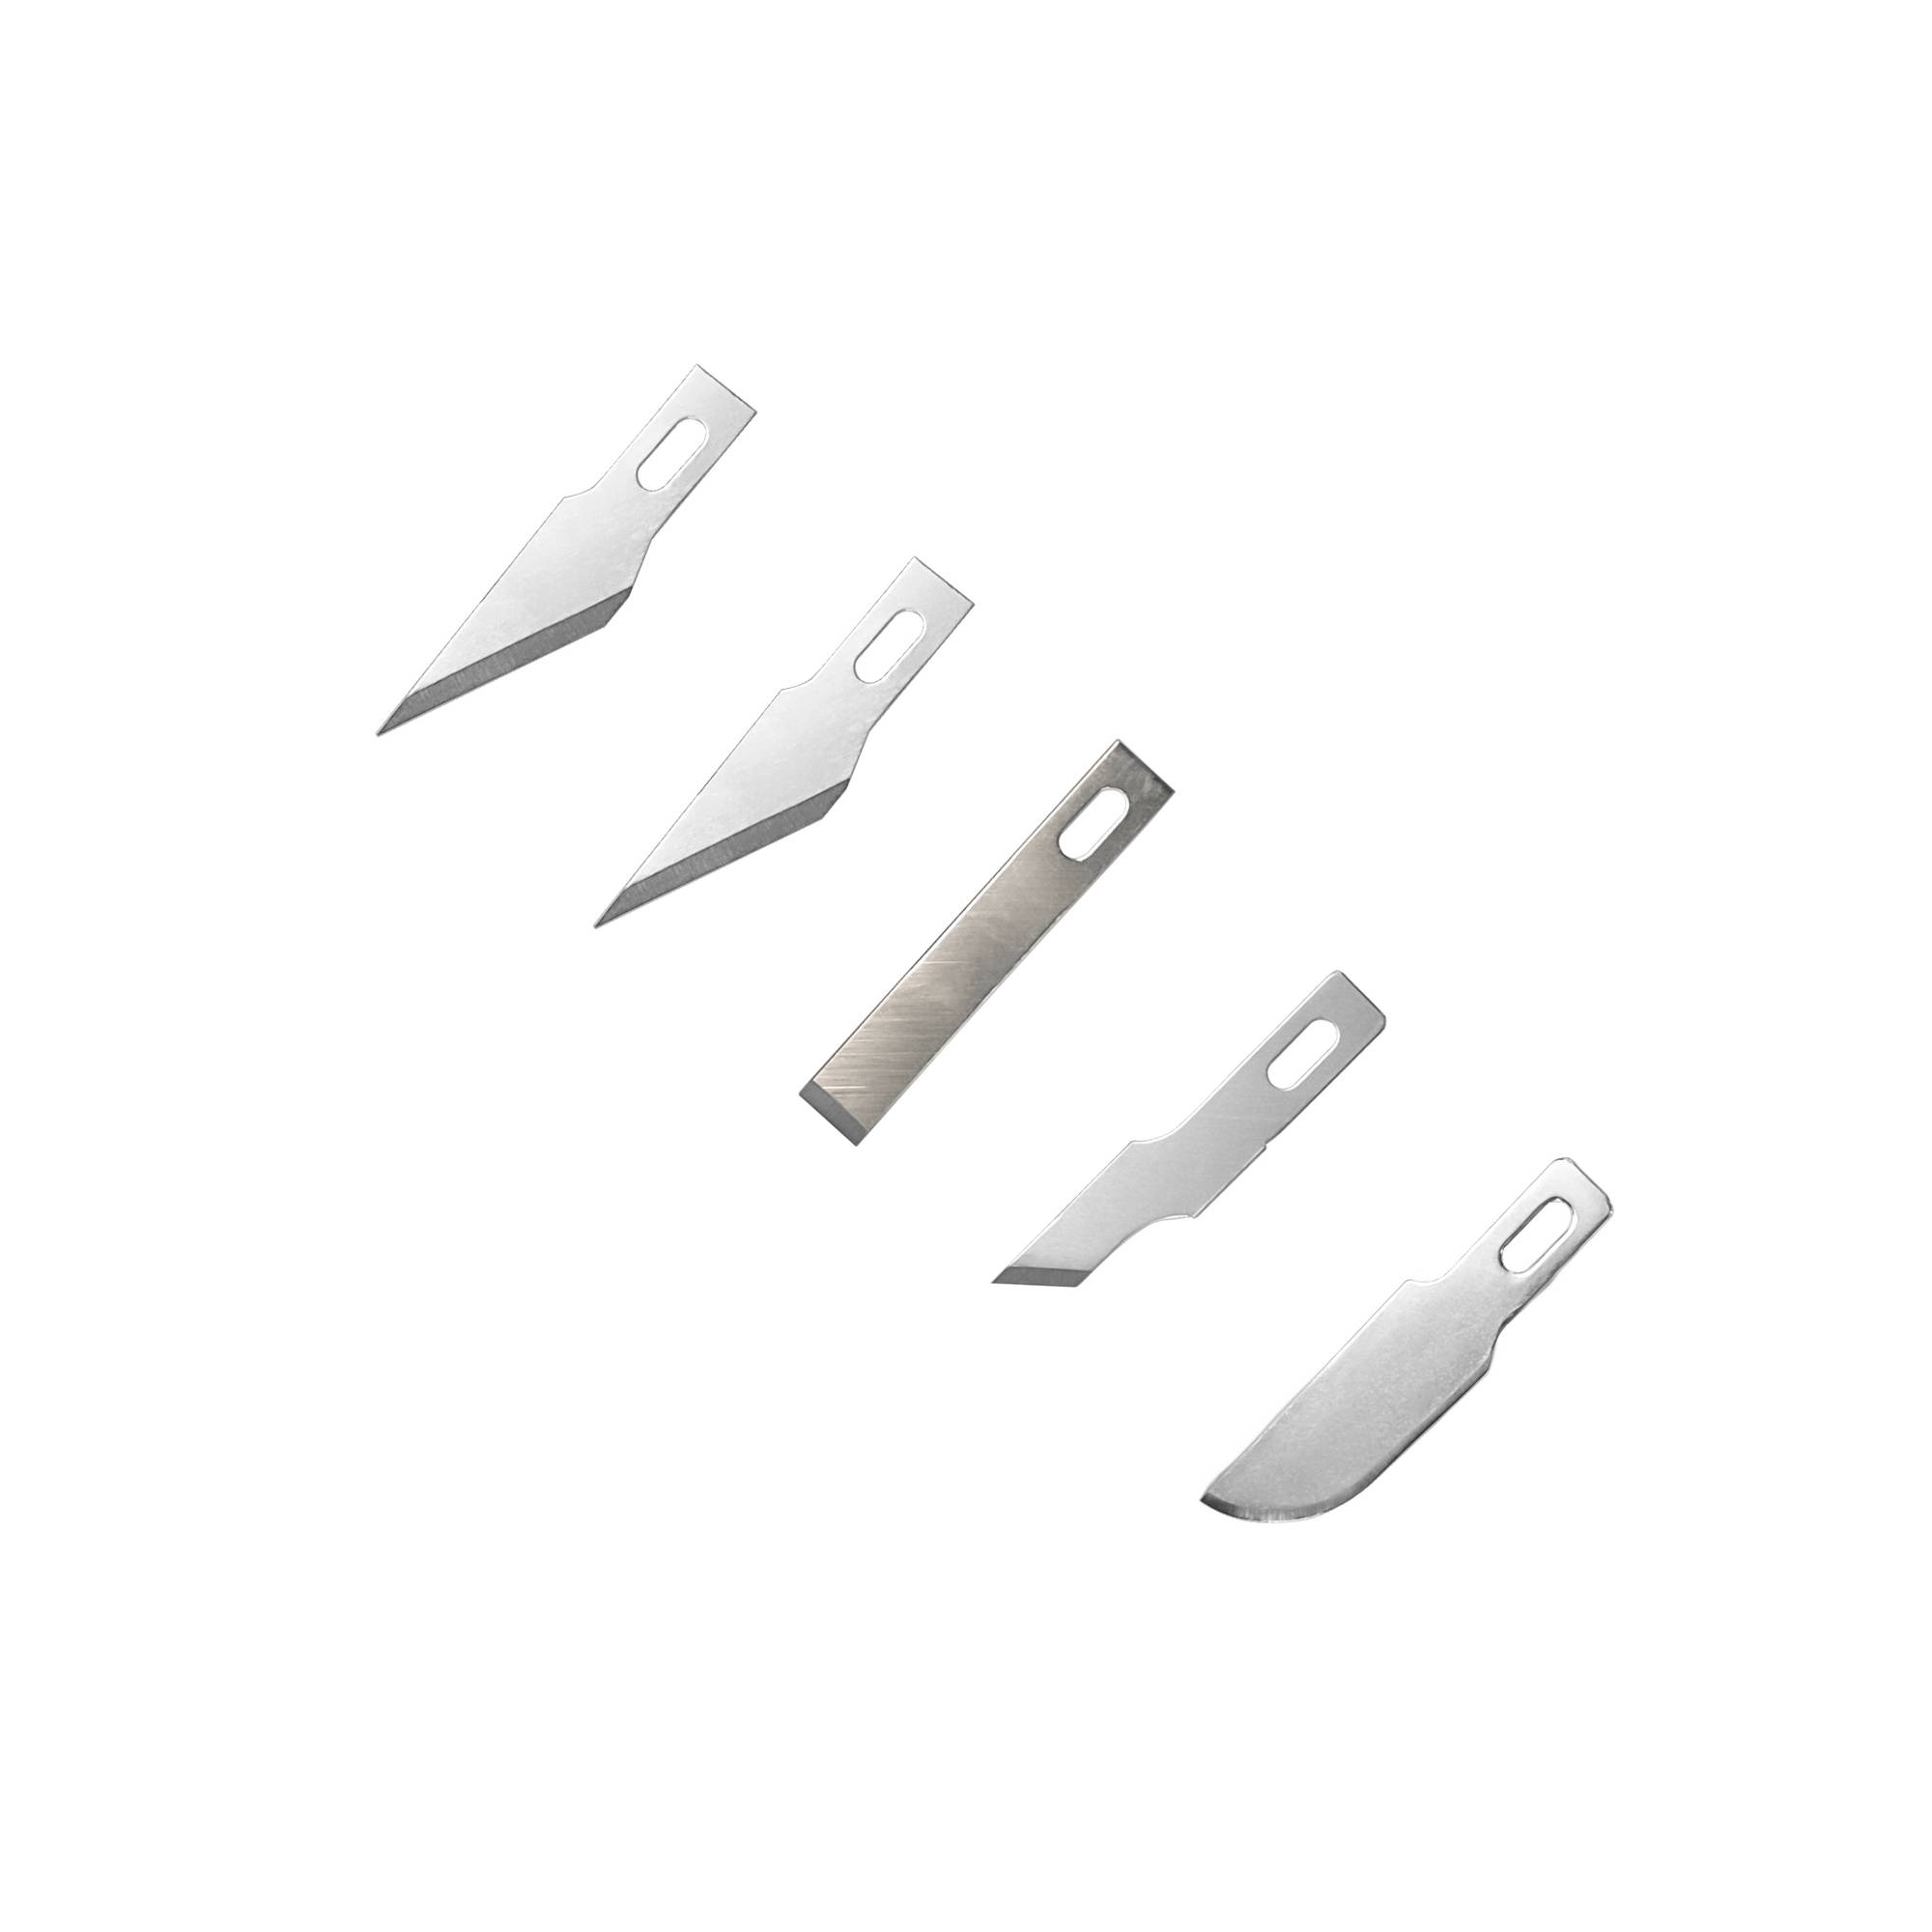 Modelcraft Assorted Blades for No.1 Knife 5 Pack